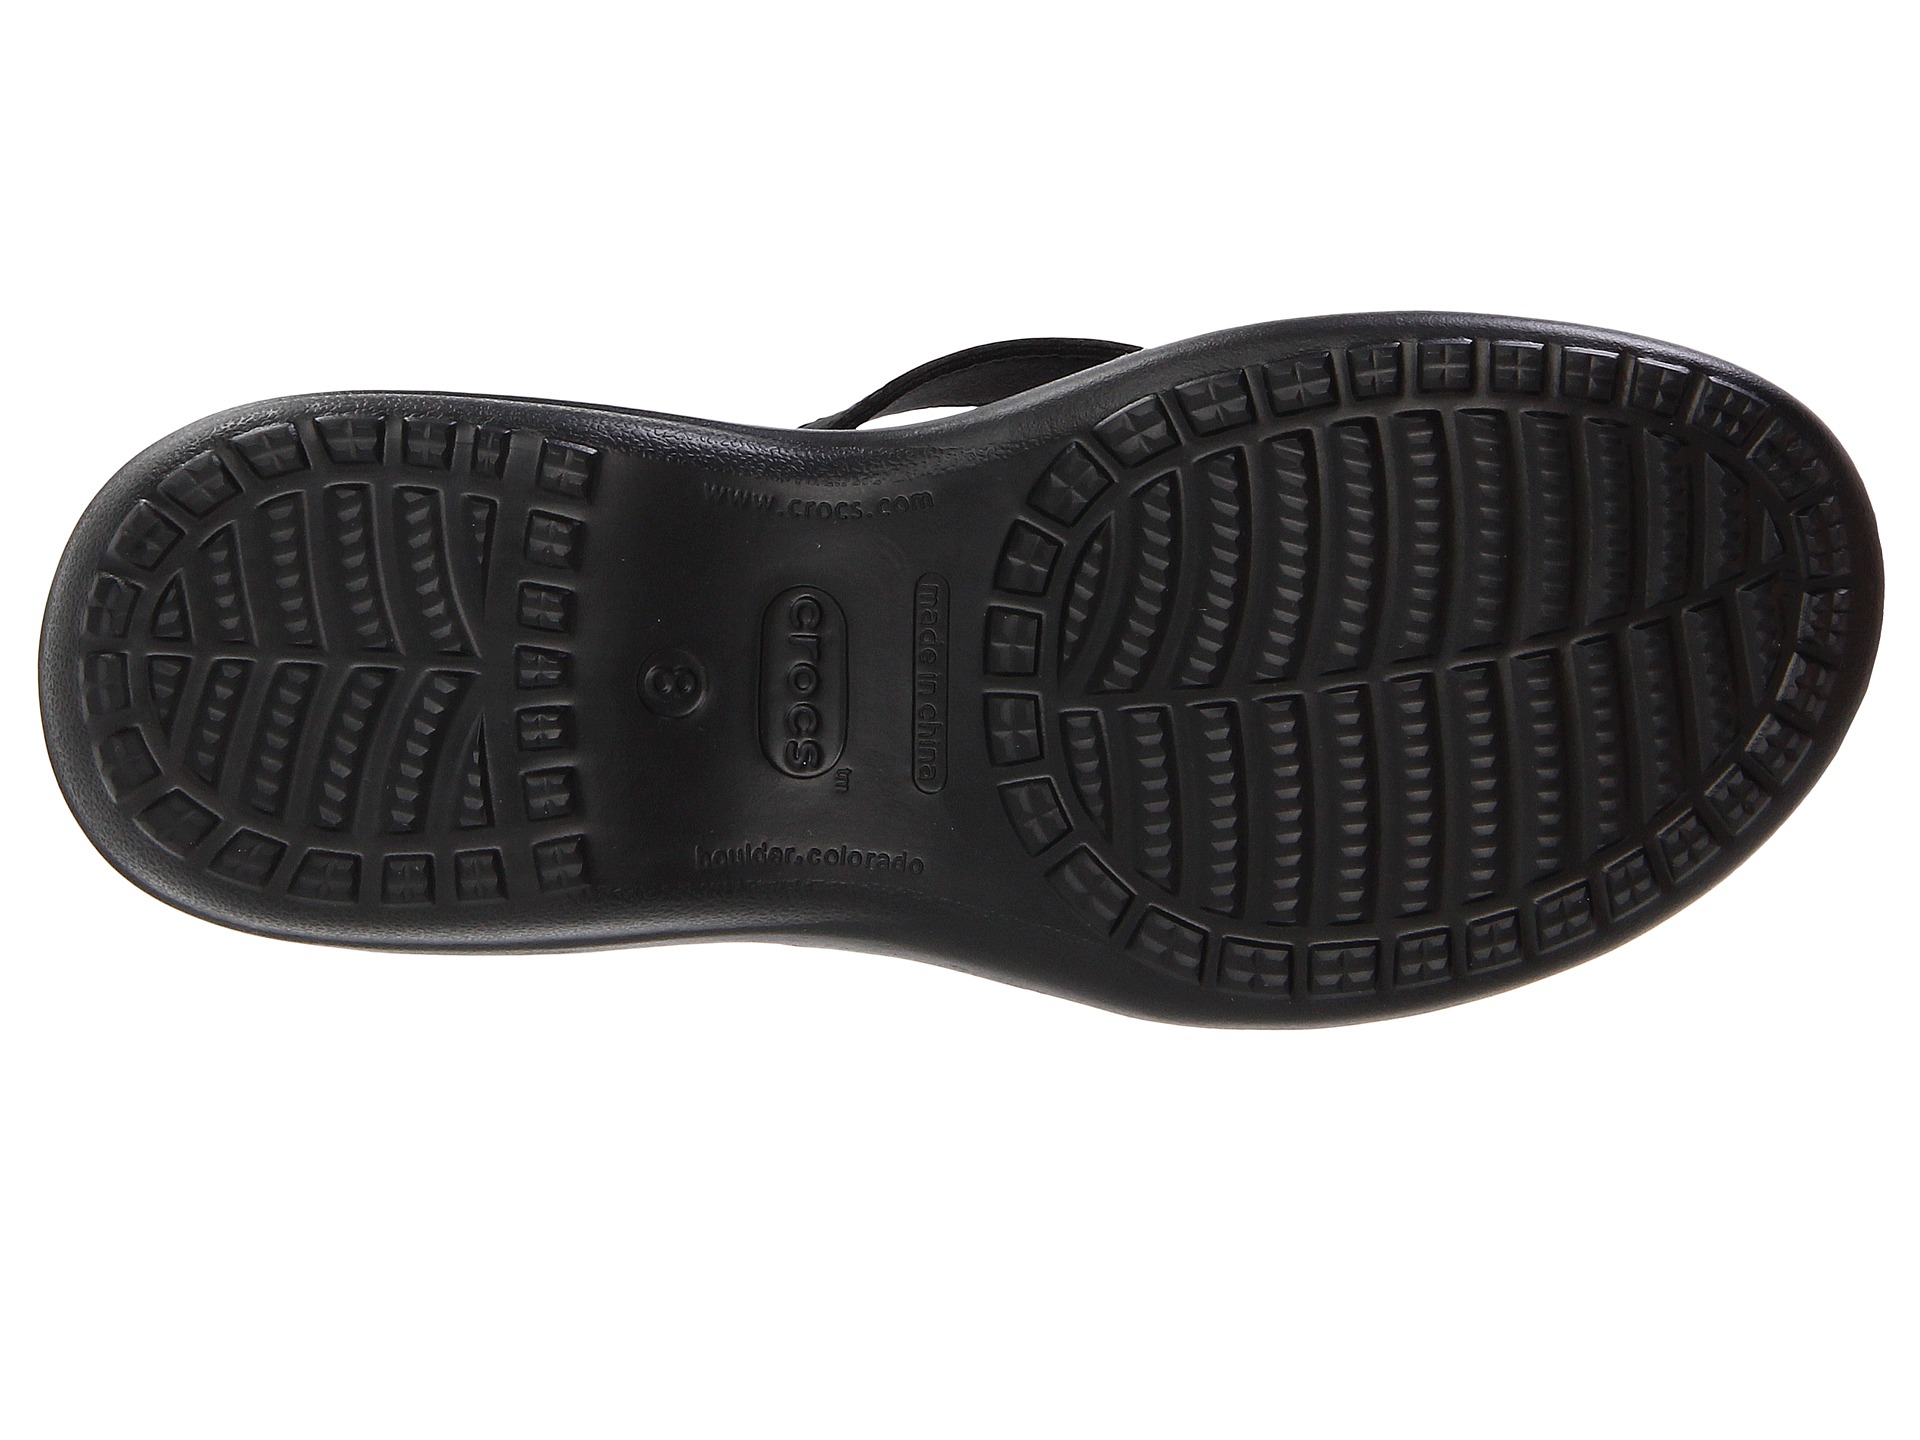 Crocs Capri Iv Black Black | Shipped Free at Zappos